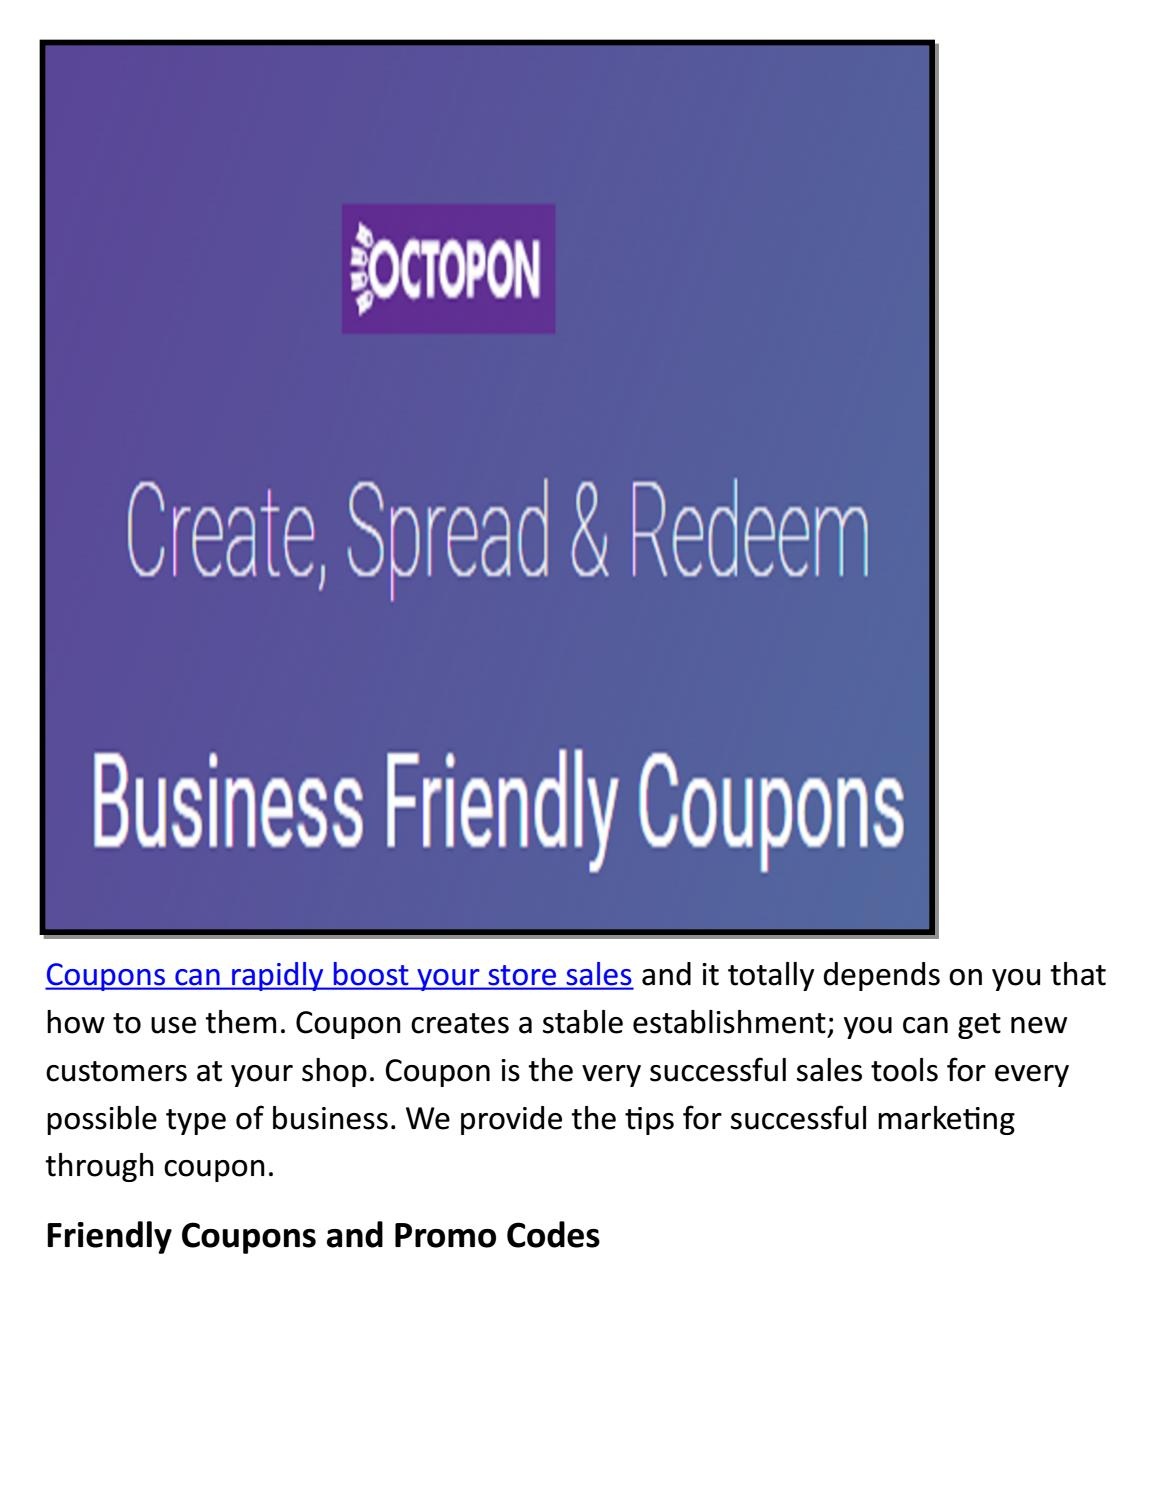 Create Your Own Coupon Free Printableoctopon Inc - Issuu - Create Your Own Coupon Free Printable